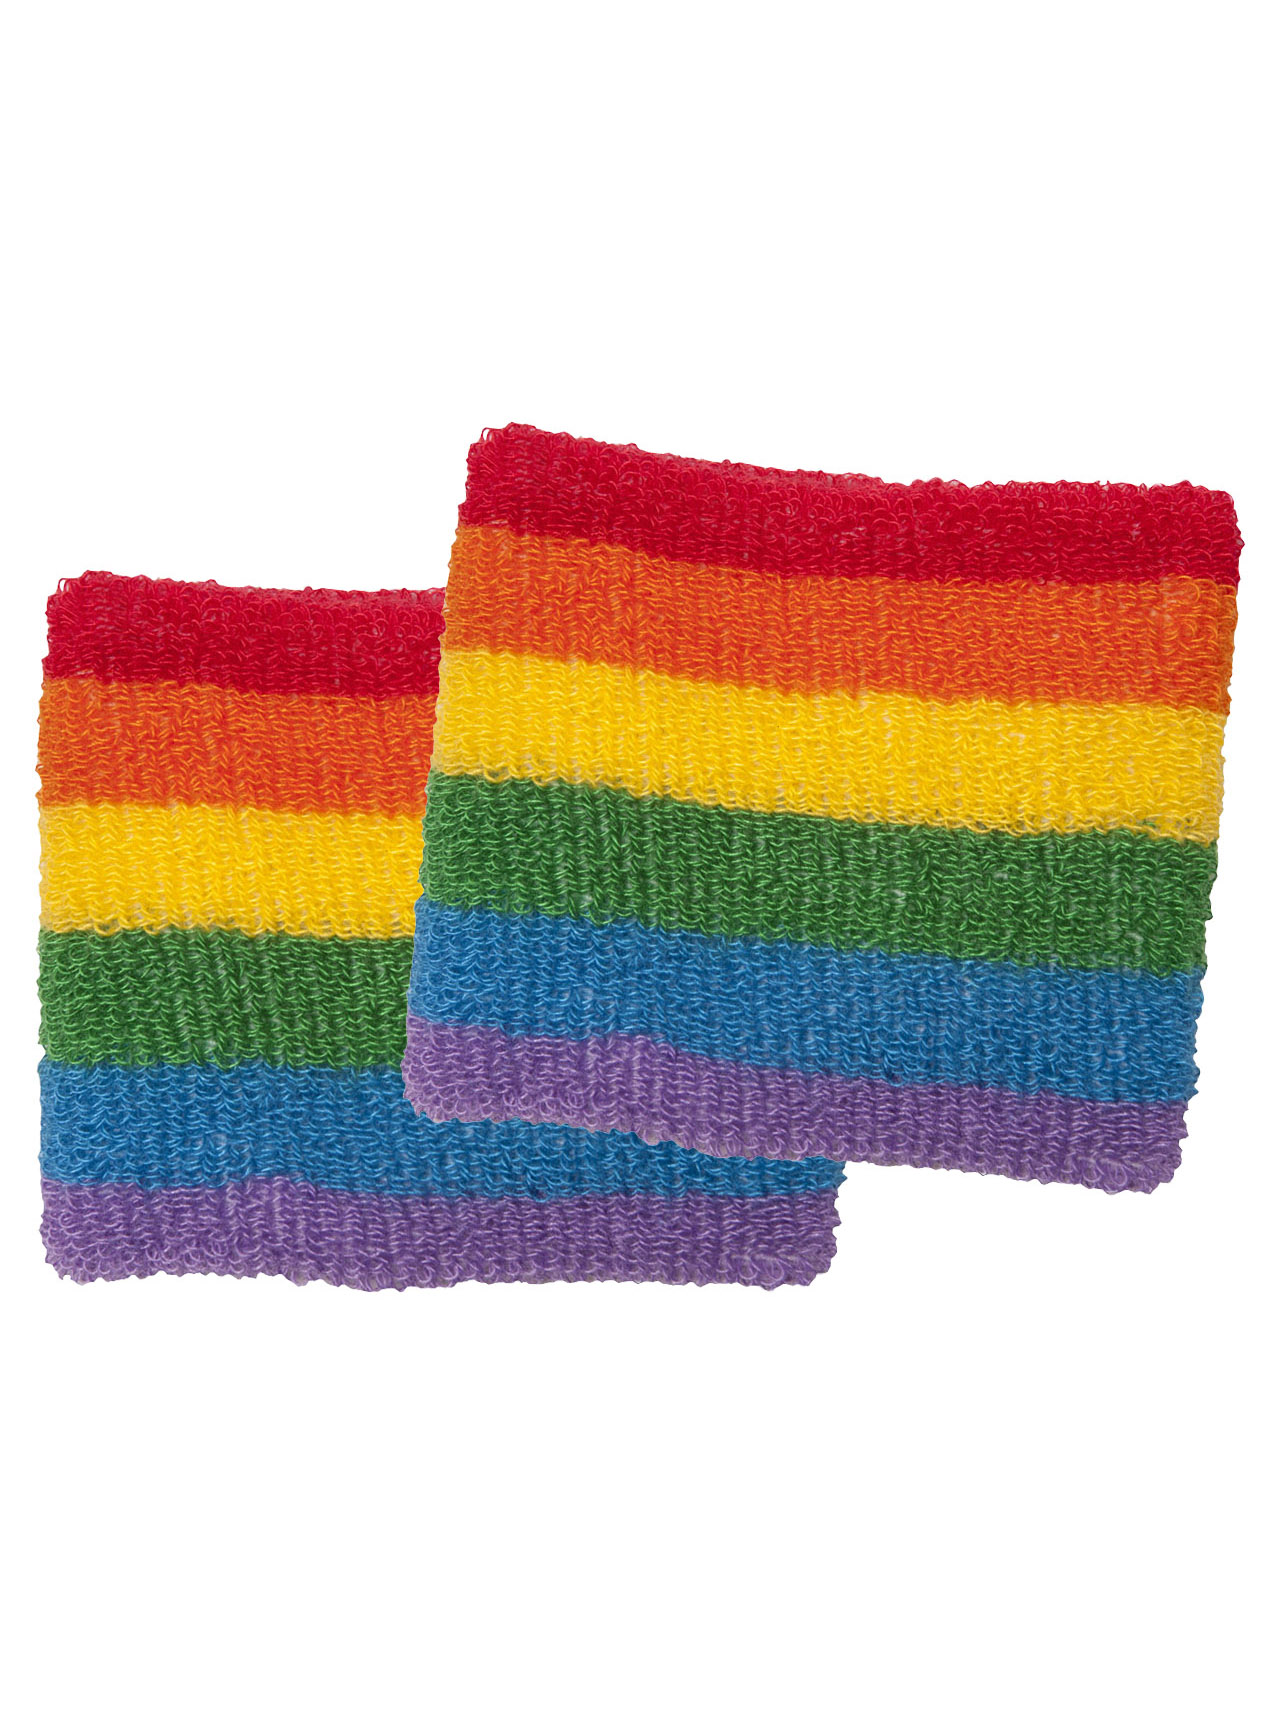 Equality Pride Kit - Headband + Wristbands - image 4 of 4